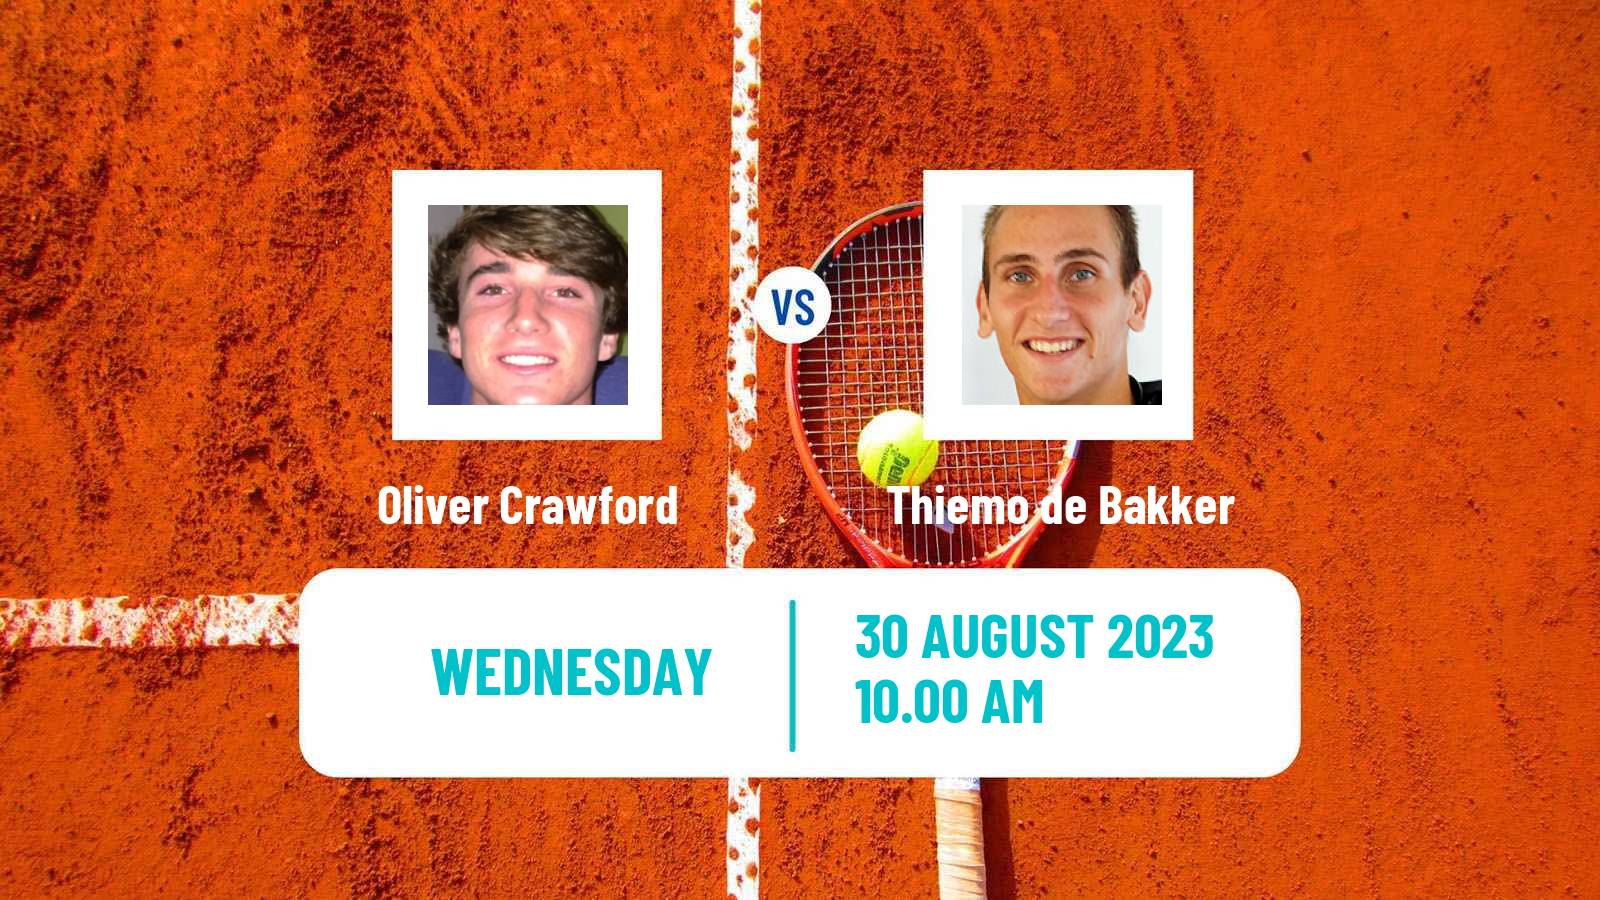 Tennis ITF M25 Oldenzaal Men Oliver Crawford - Thiemo de Bakker